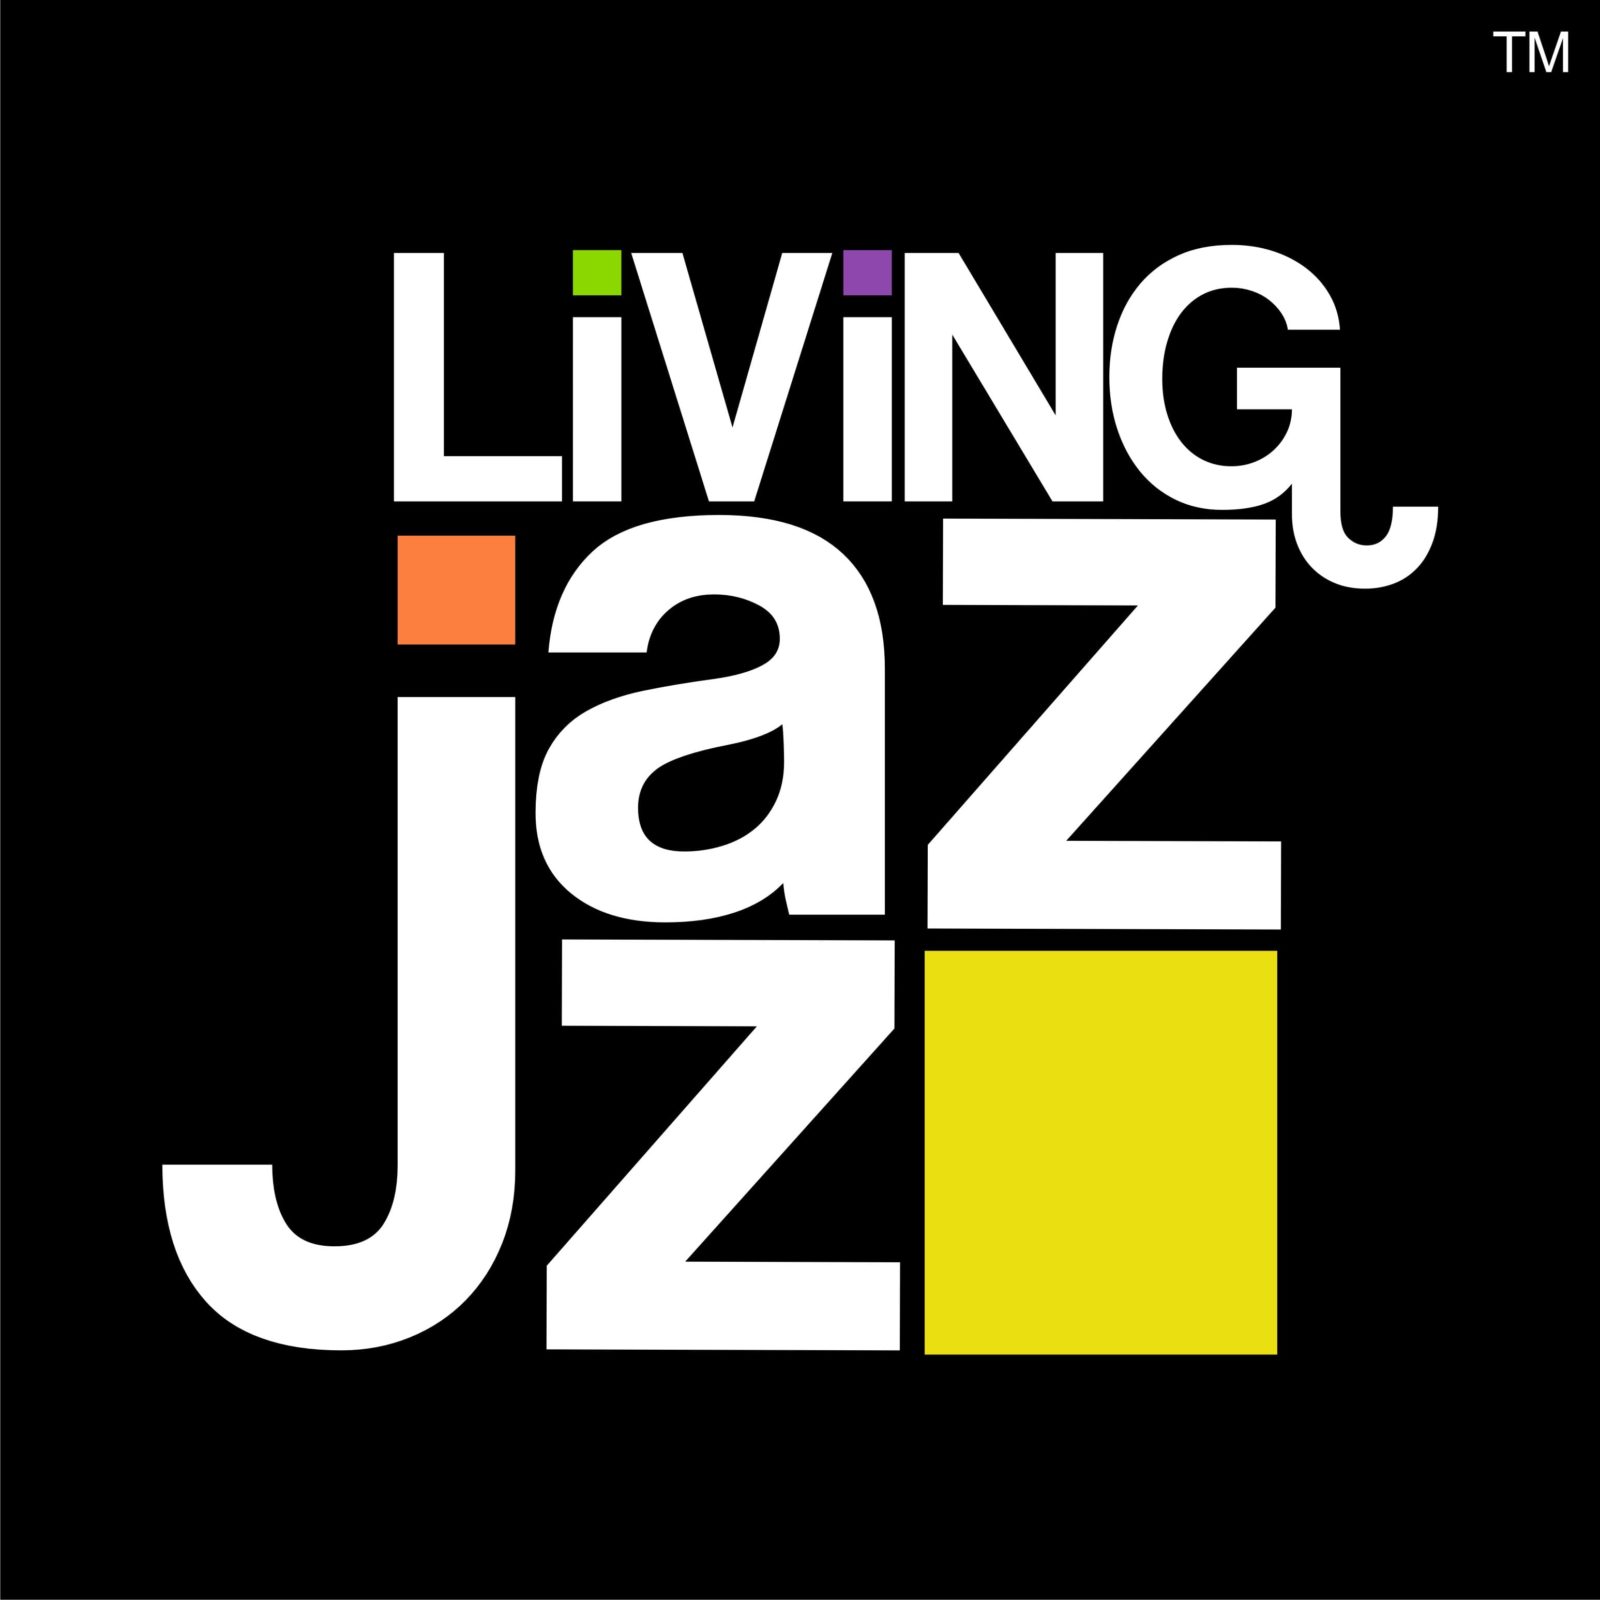 Living Jazz